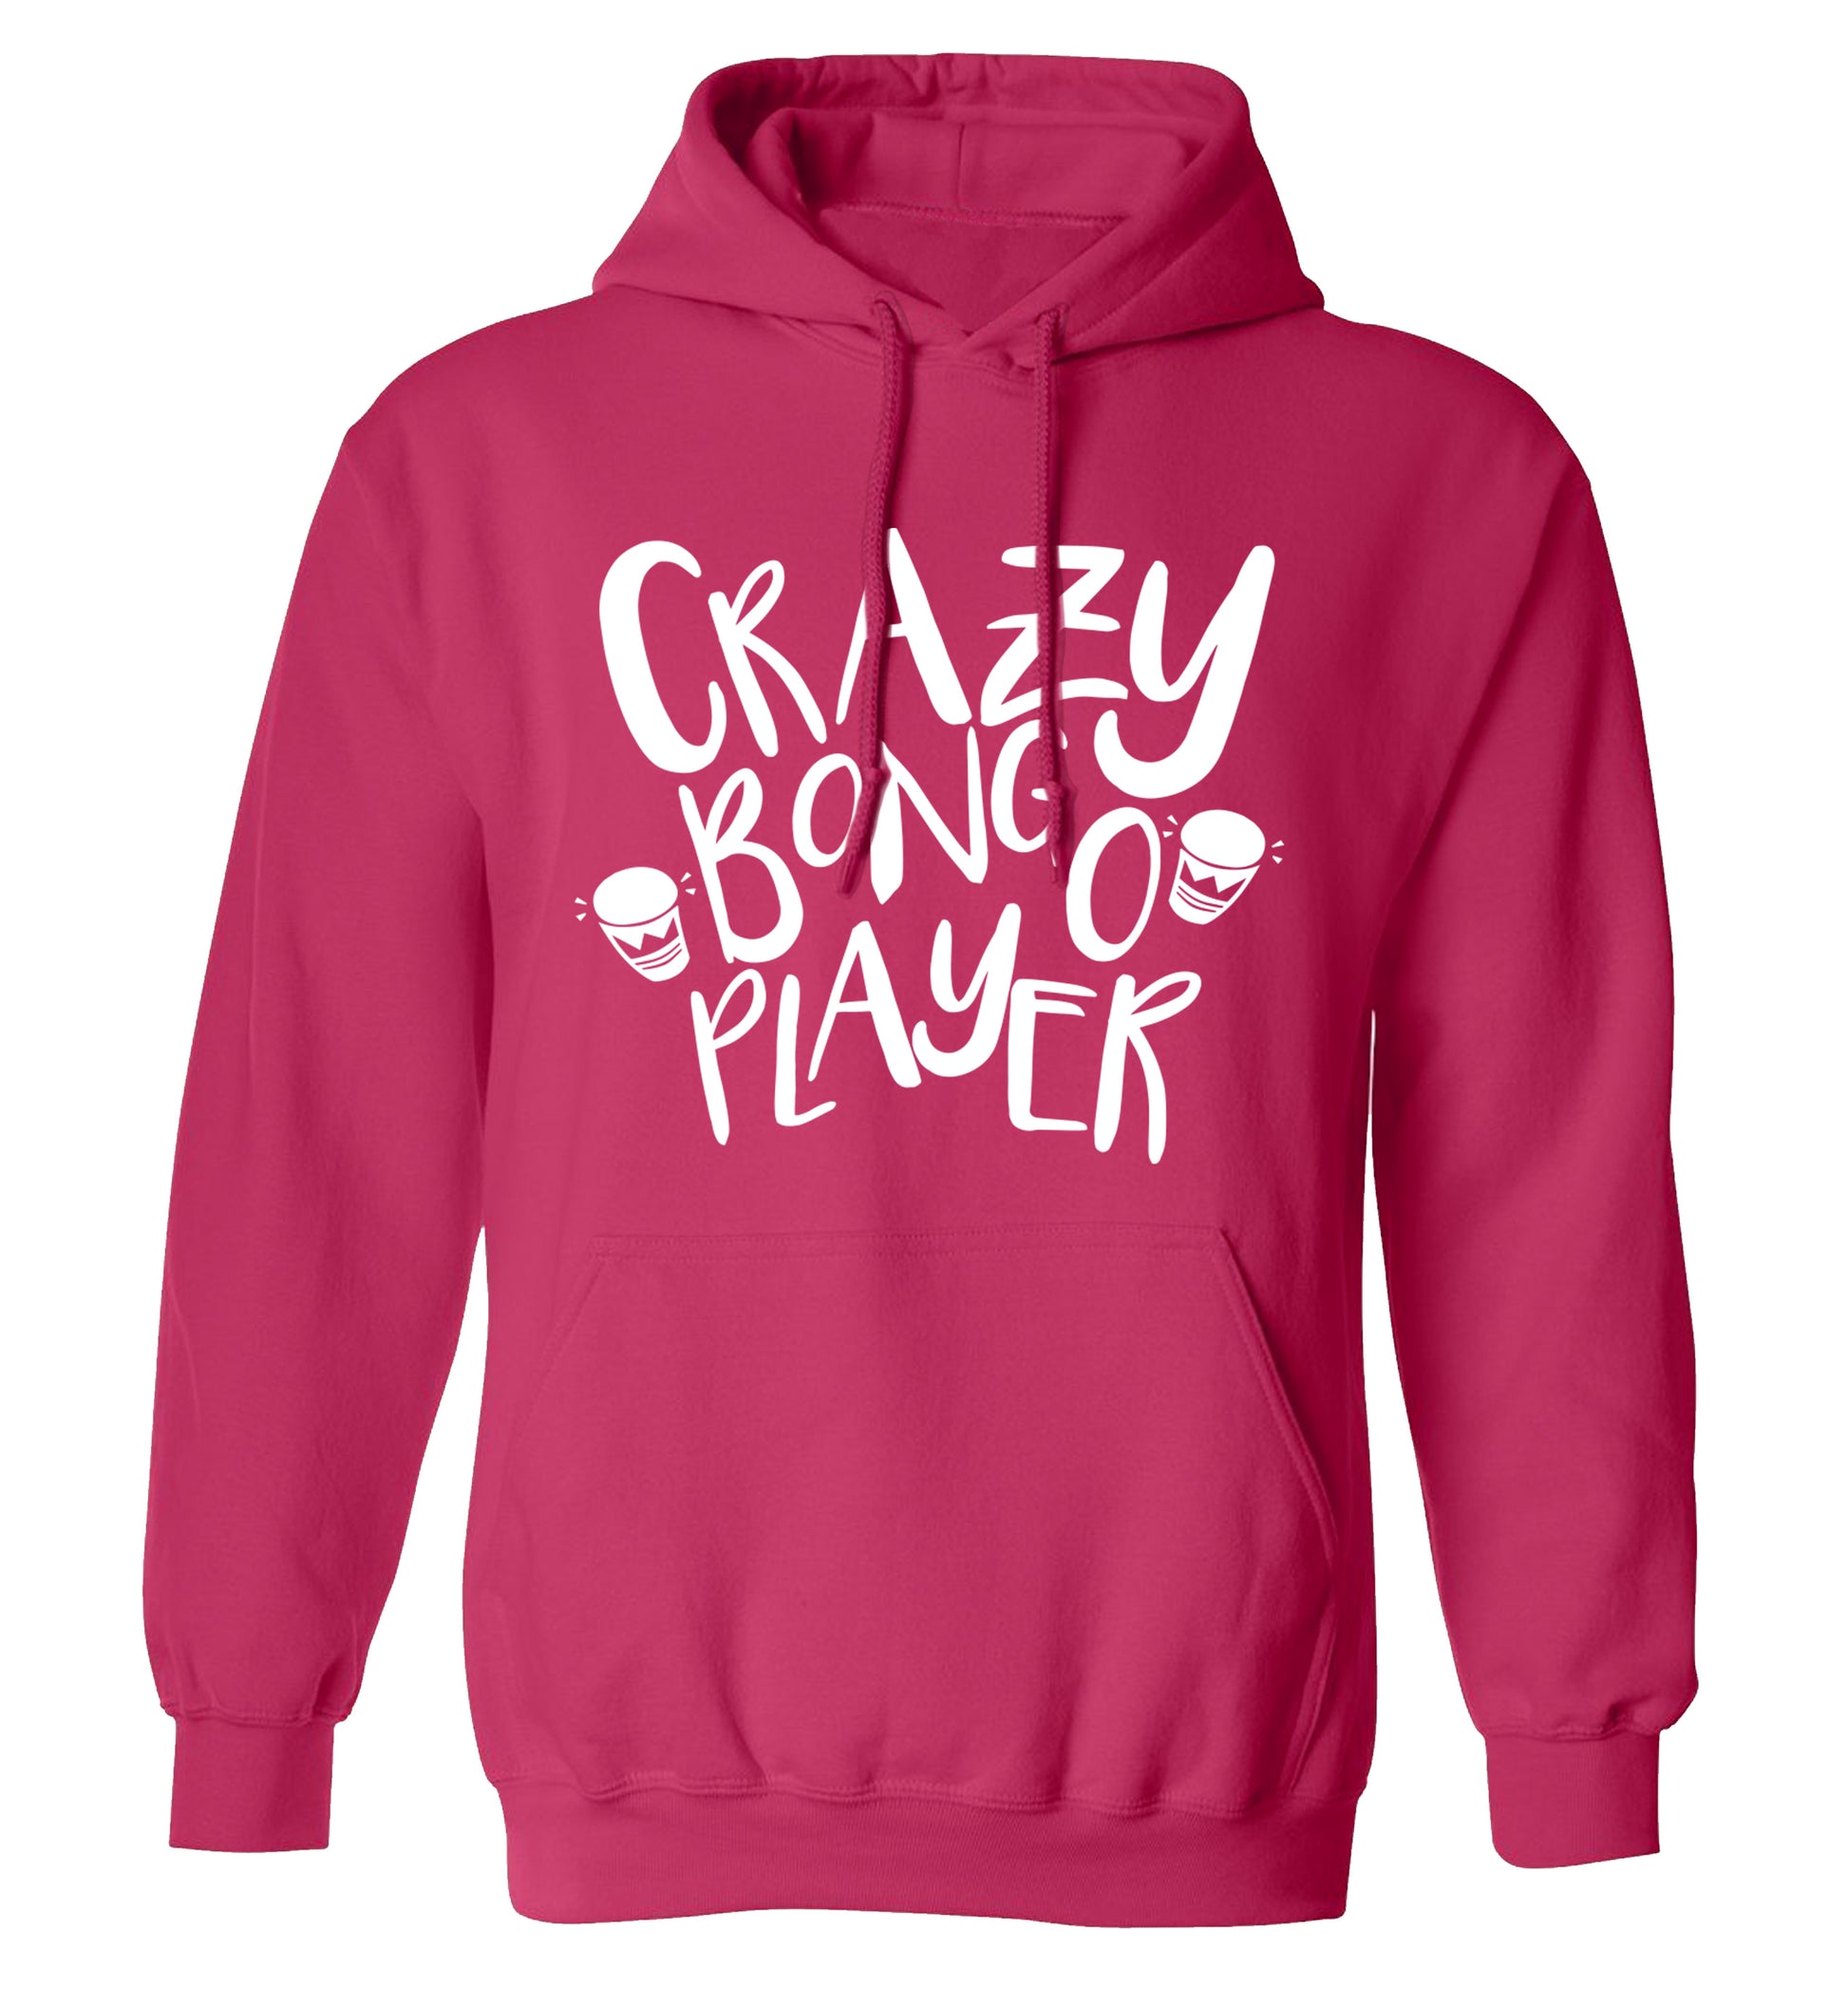 Crazy bongo player adults unisex pink hoodie 2XL